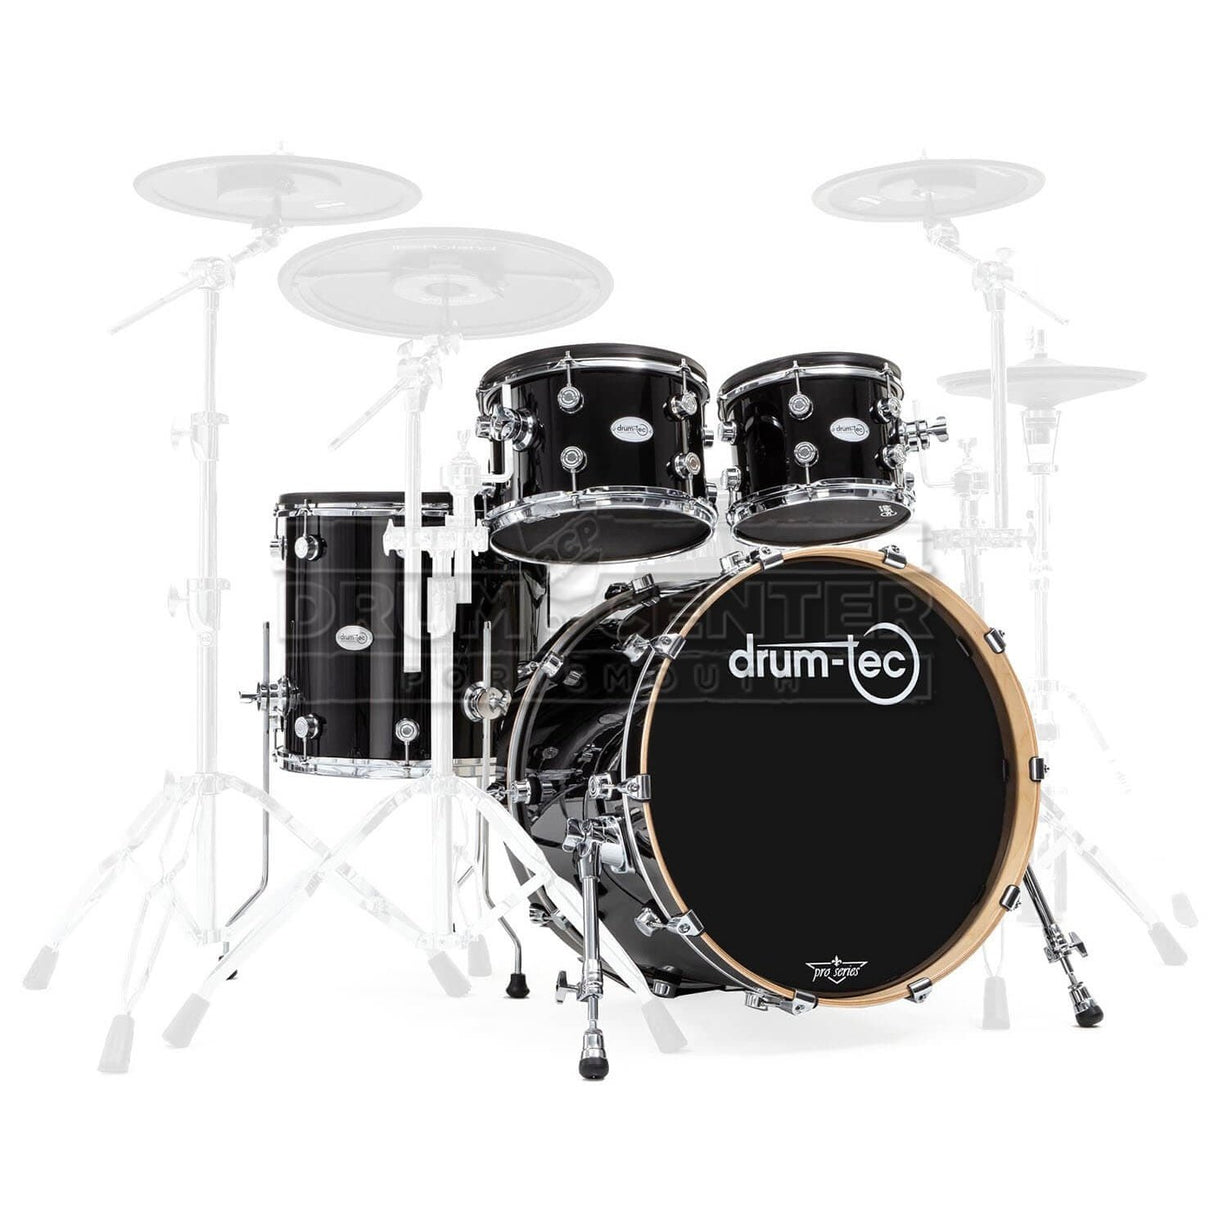 Drum-Tec Pro 3 Series 4pc E-Drum Set w/22" BD Piano Black